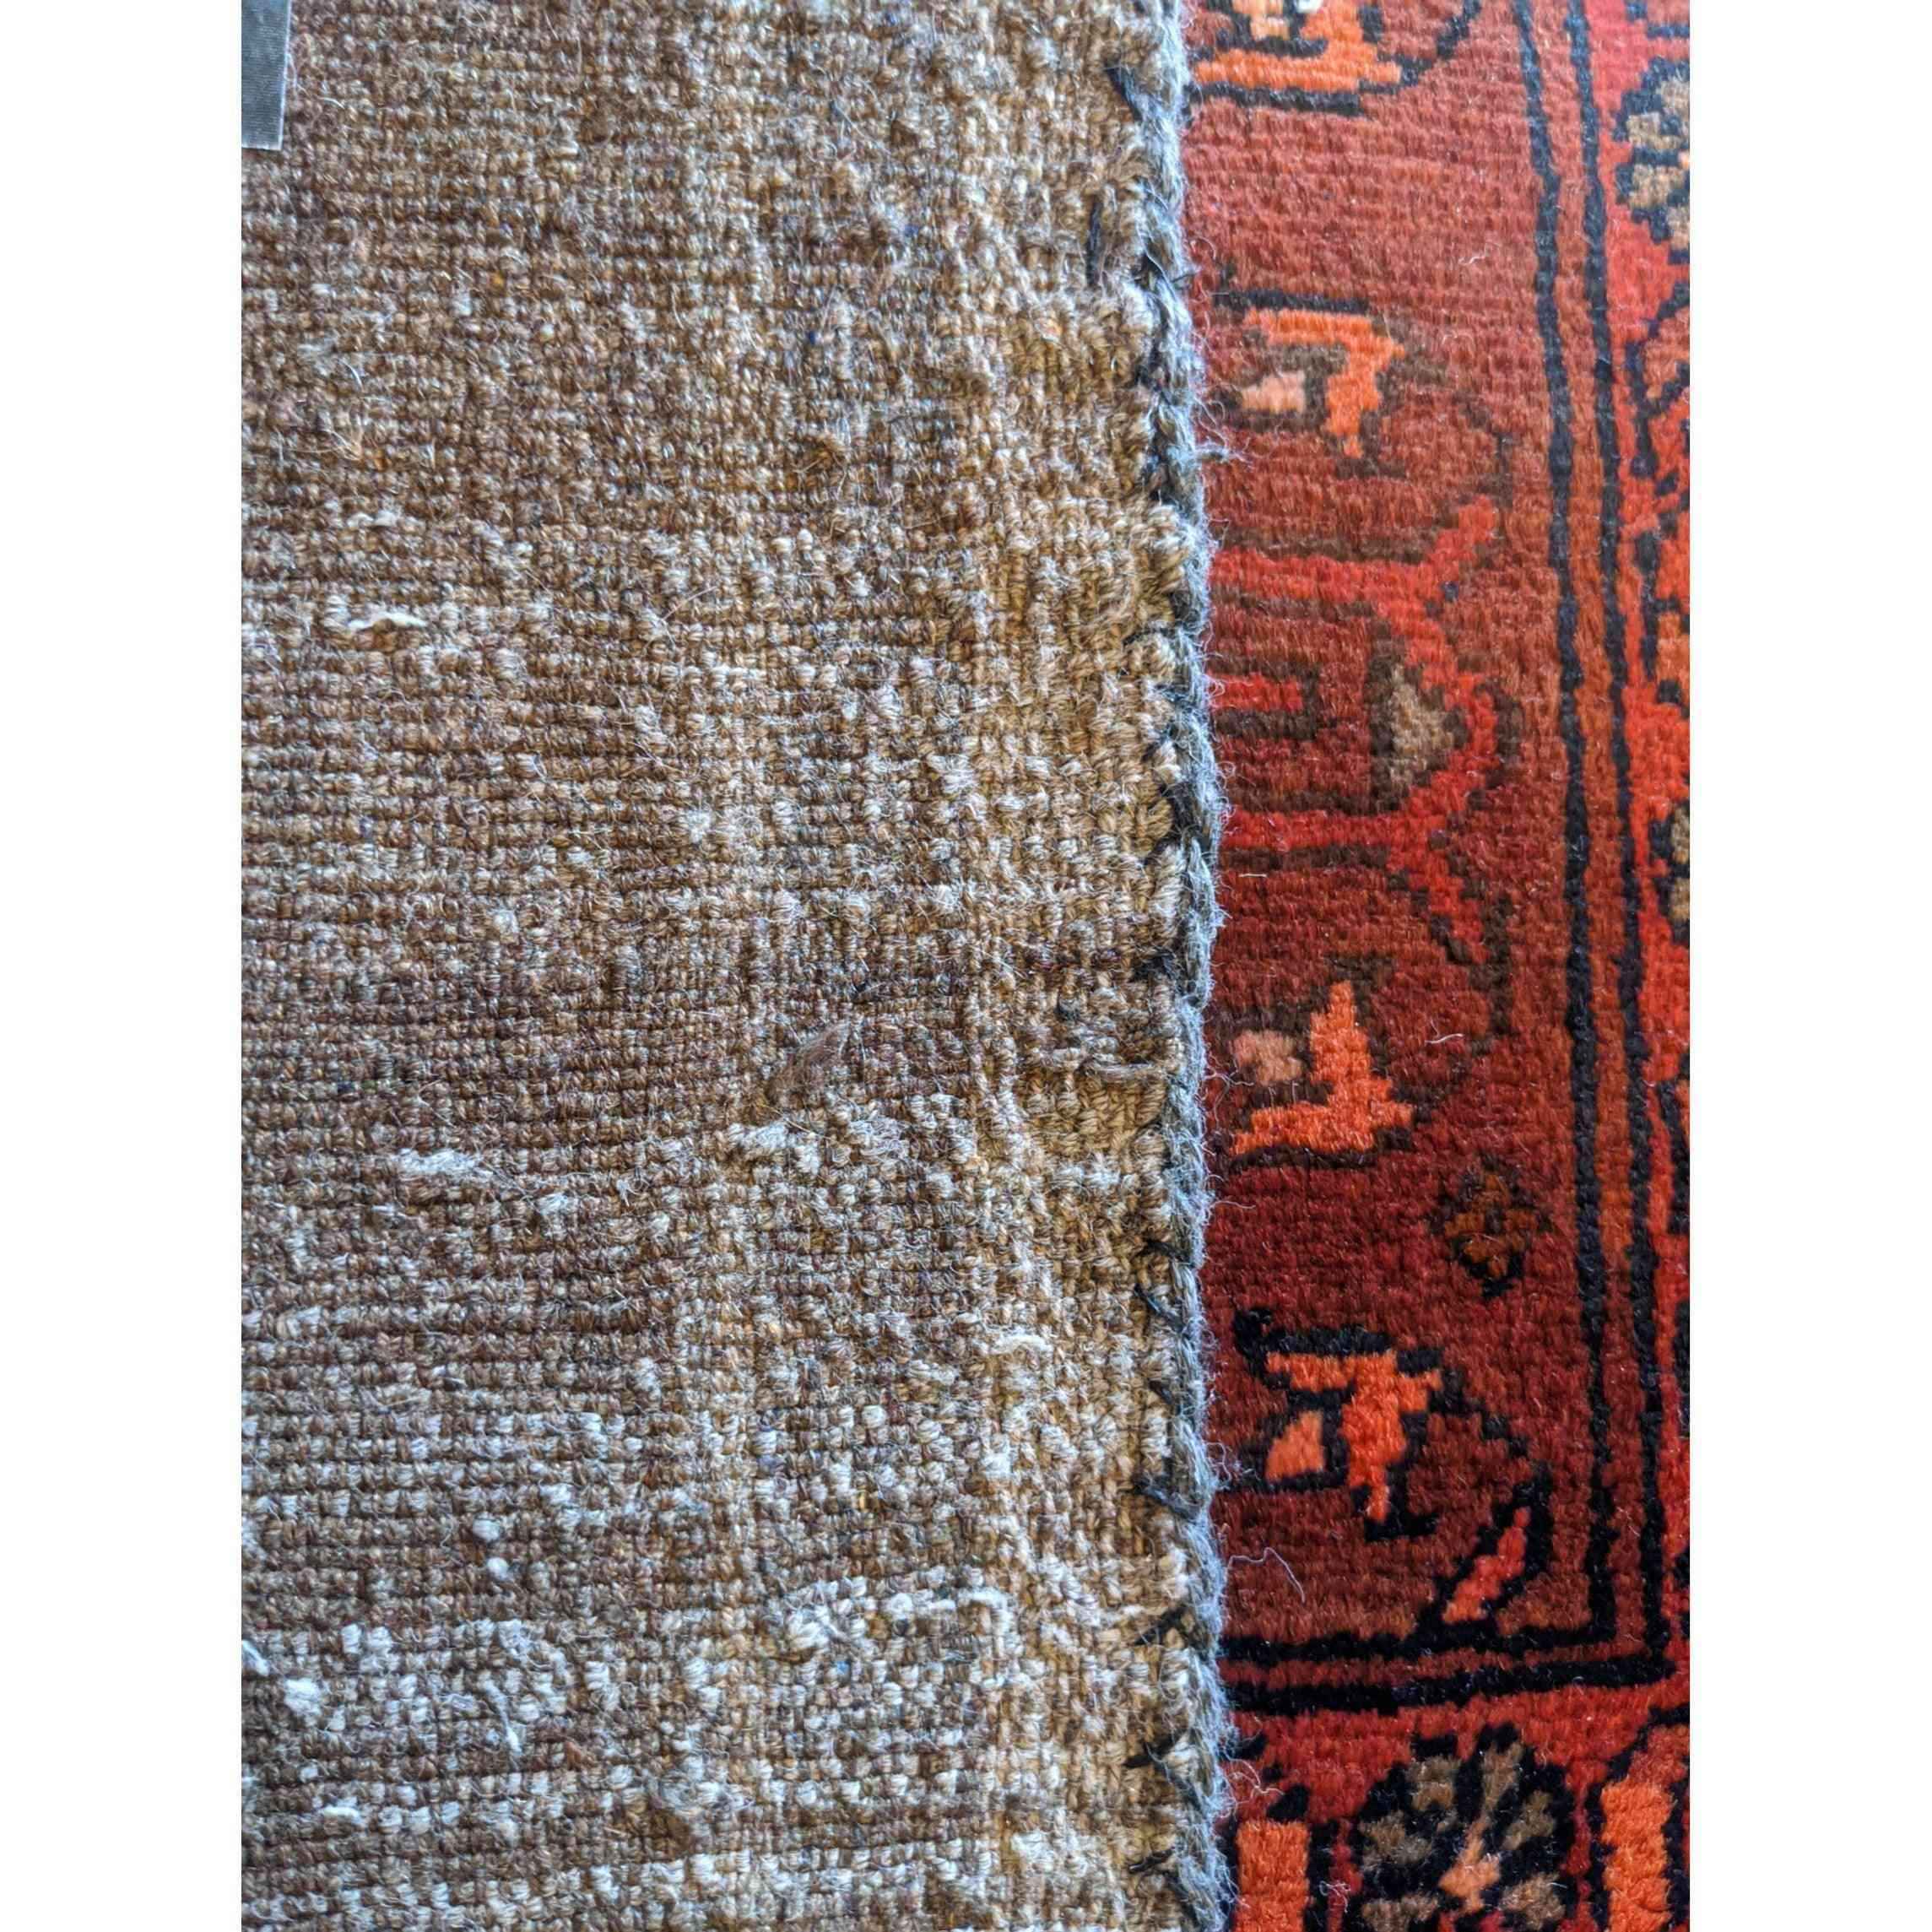 75 x 60 cm Persian Baluch Sadel Bag Tribal Red Small Rug - Rugmaster